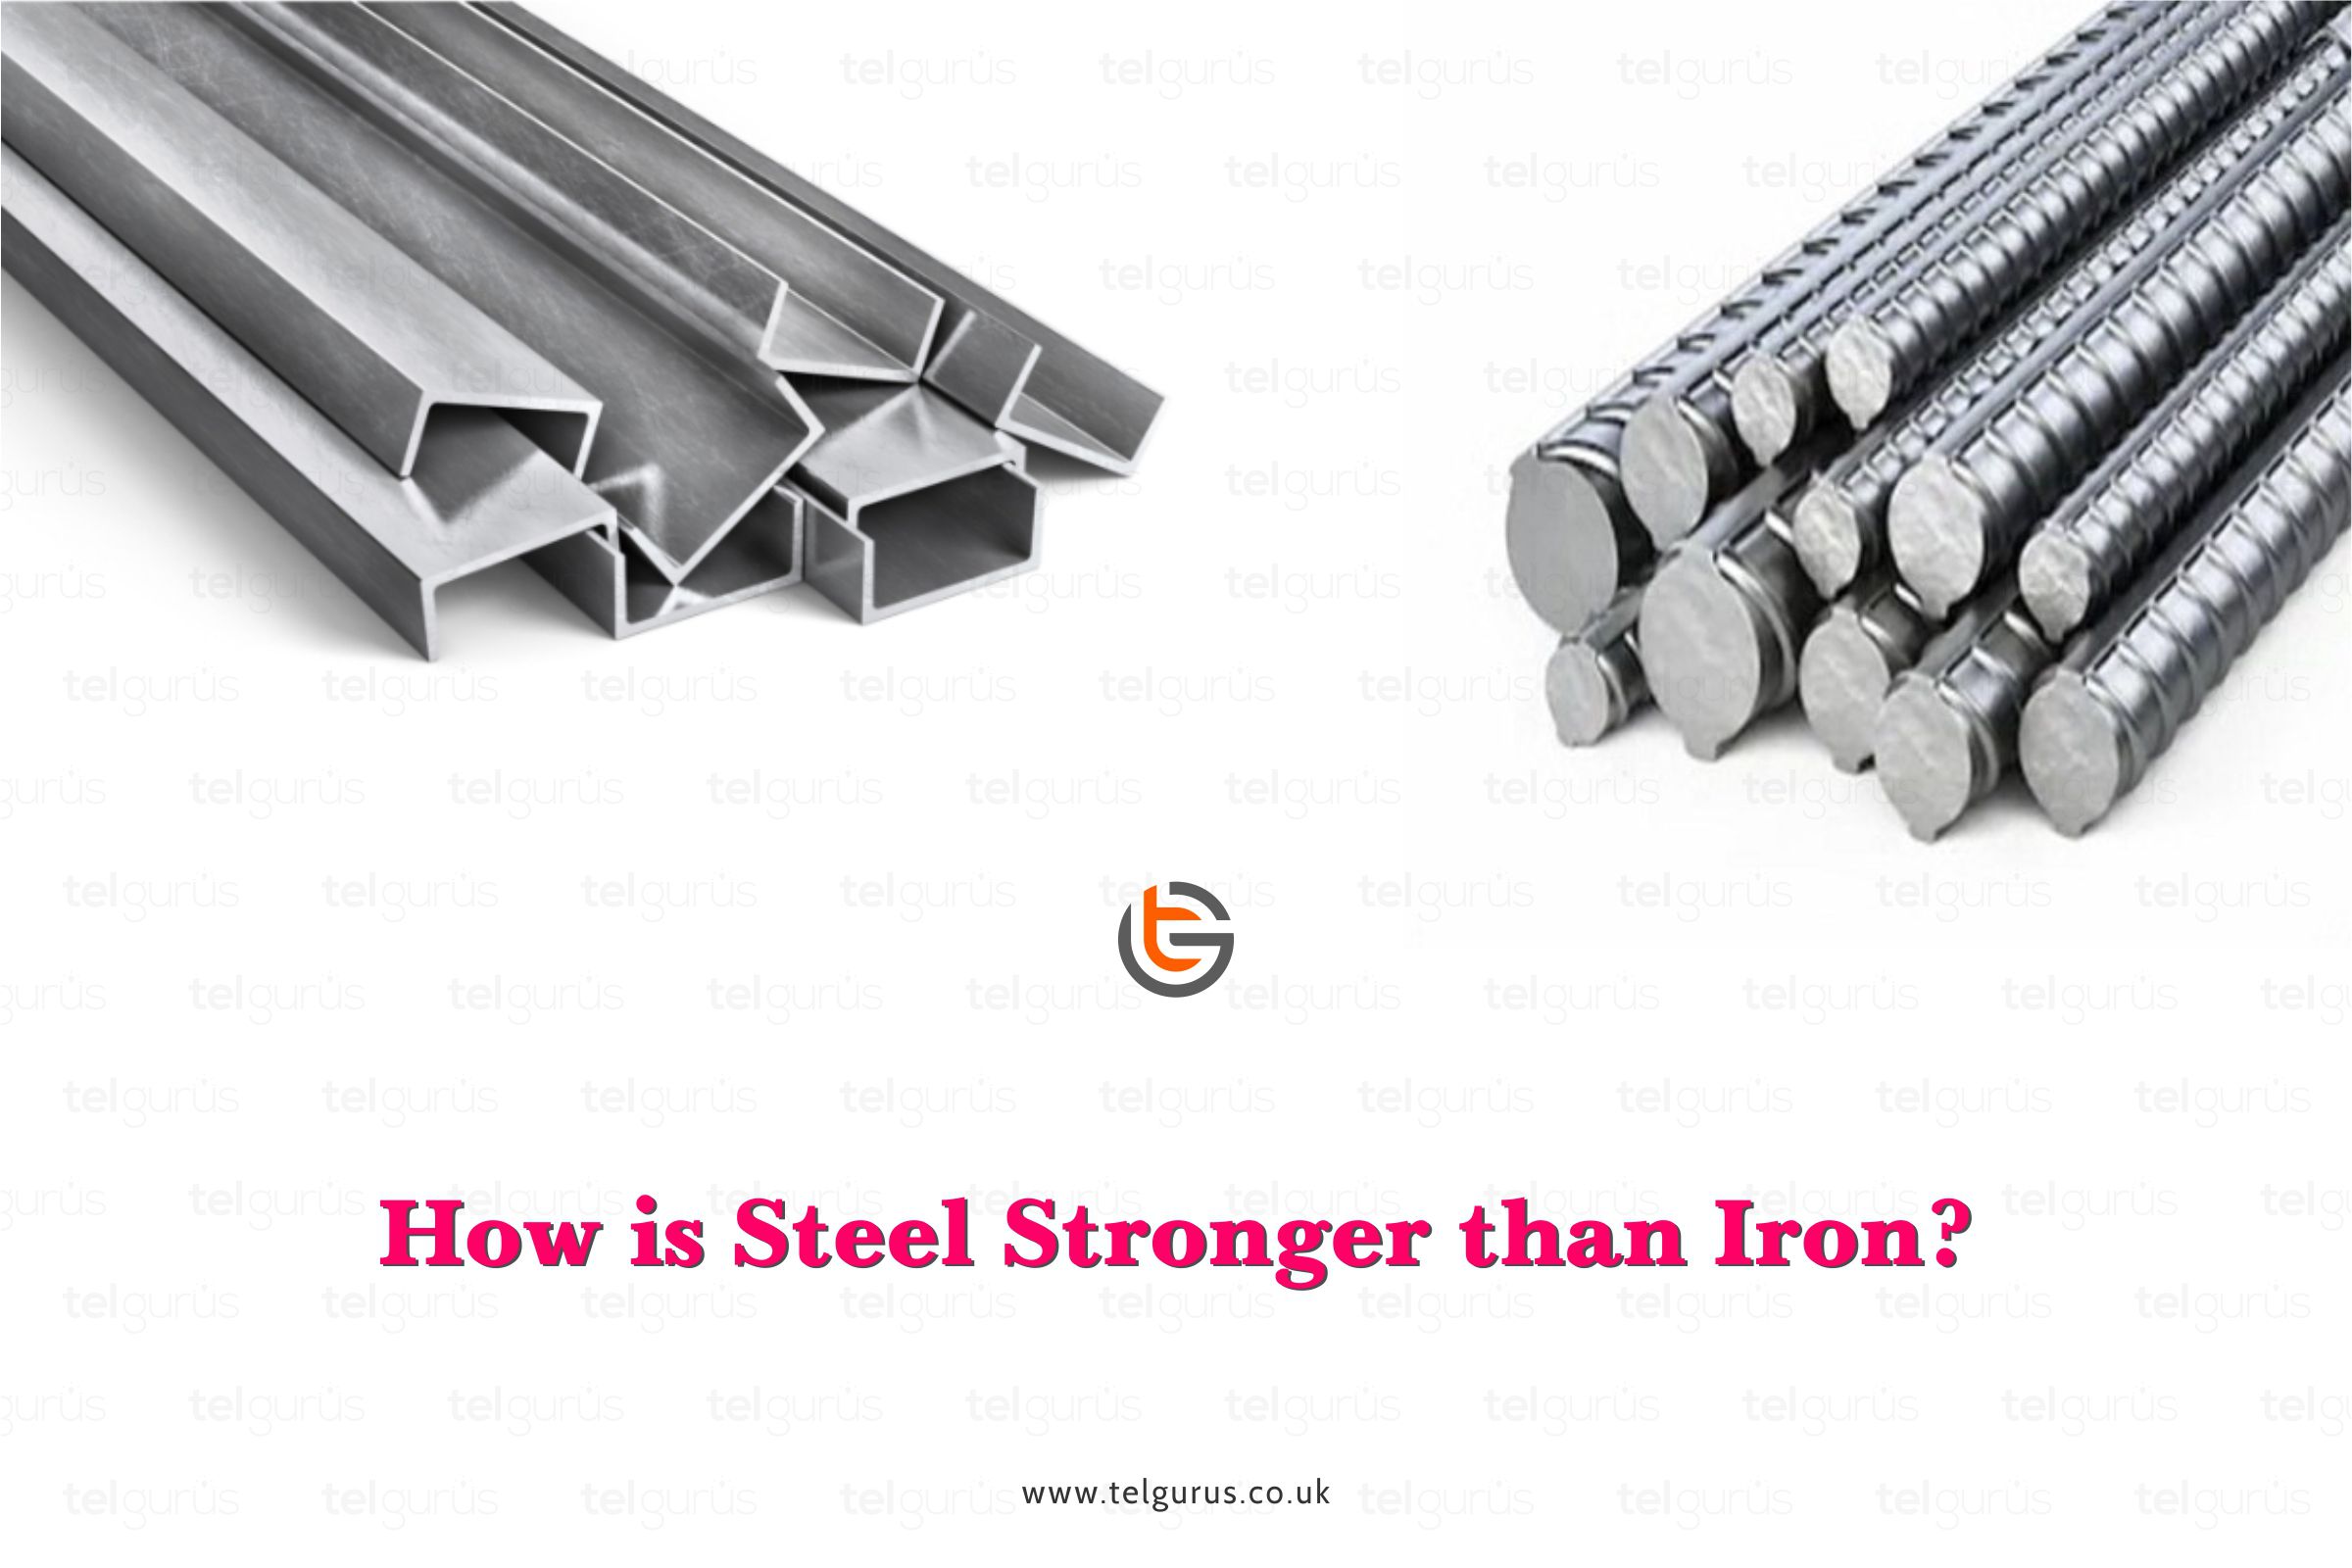 Steel stronger than Iron